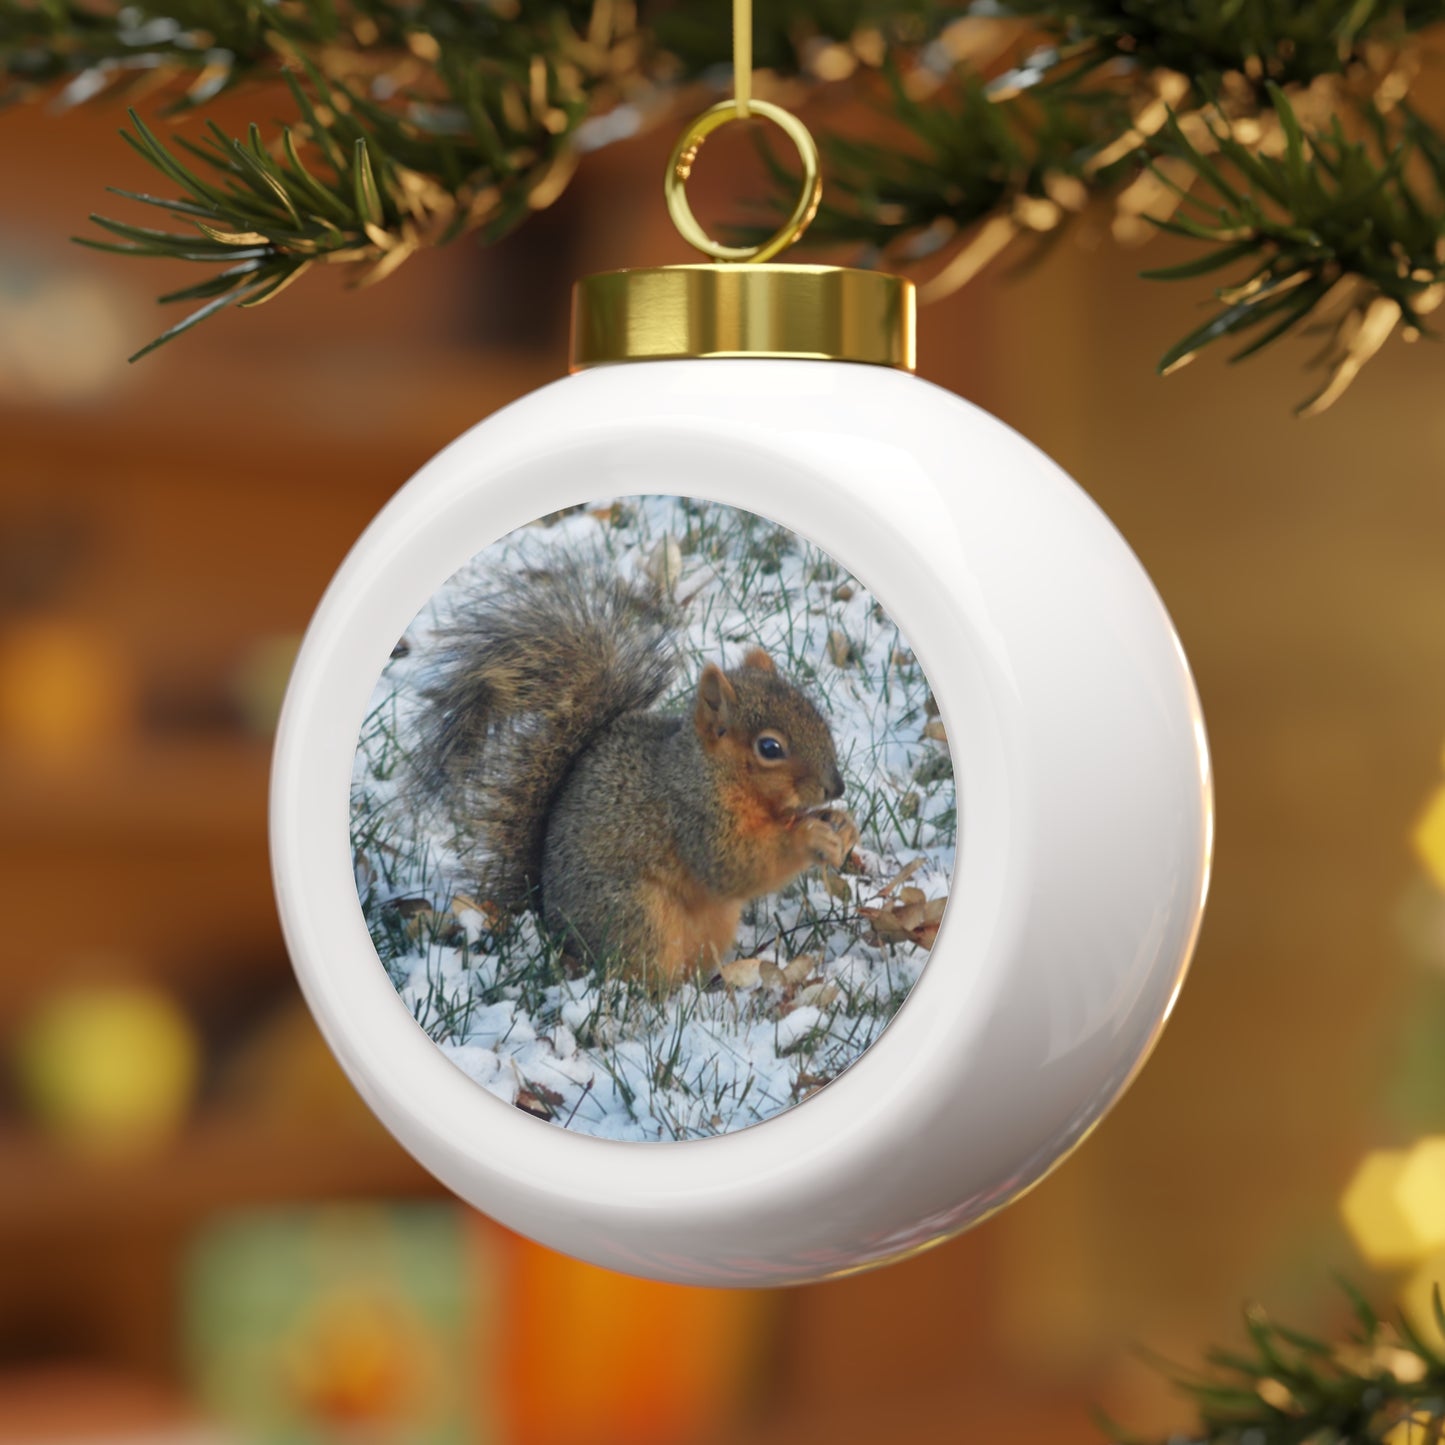 Winter Squirrel Christmas Ball Ornament